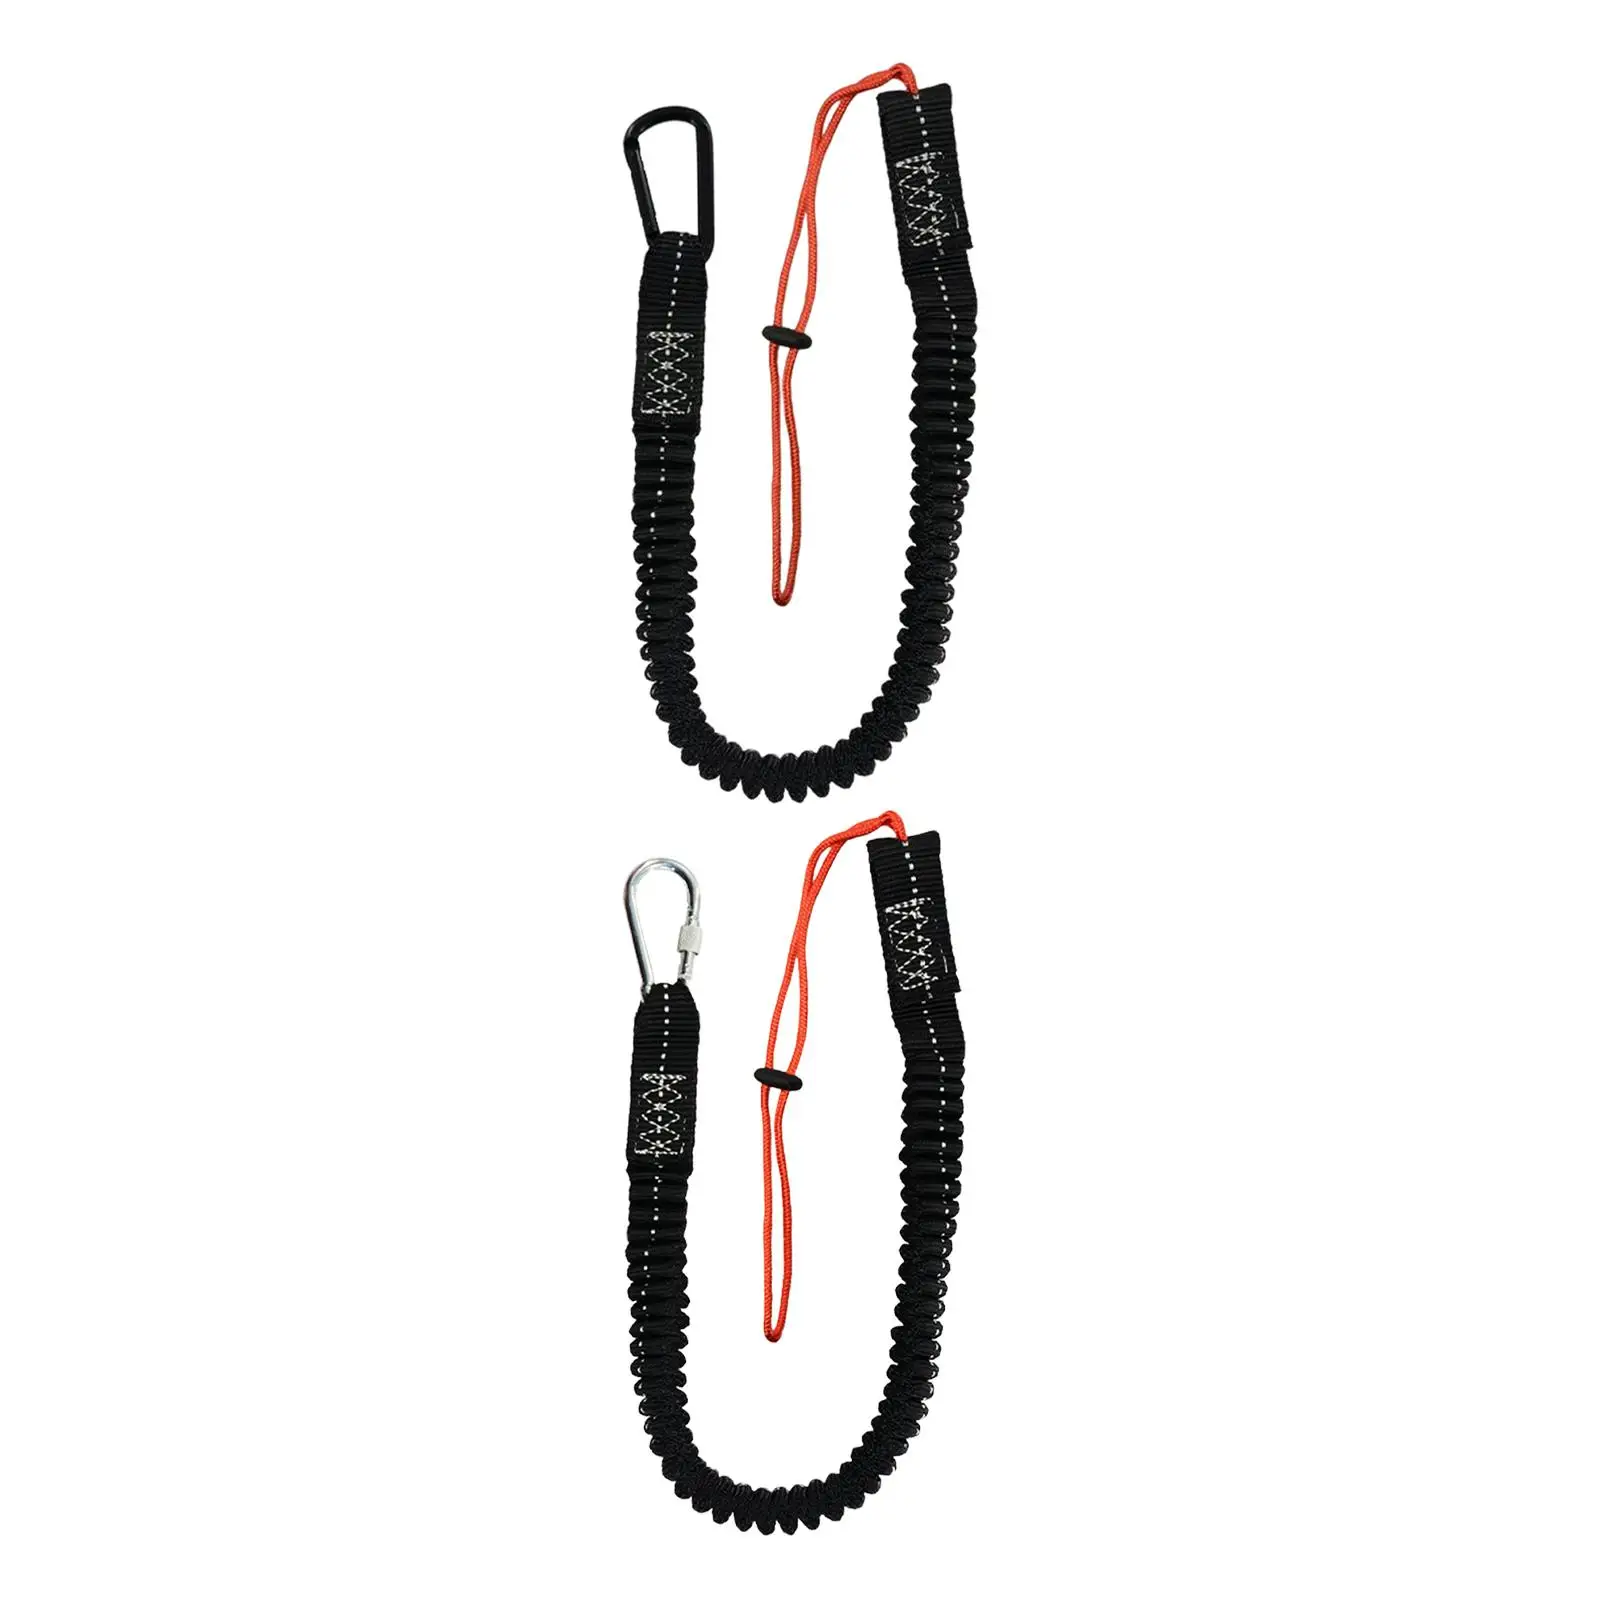 Tool Lanyard Adjustable Loop End Elastic Rope Leash Self Locking Carabiner Clip Bungee Cord for Outdoor Climbing Mountaineering